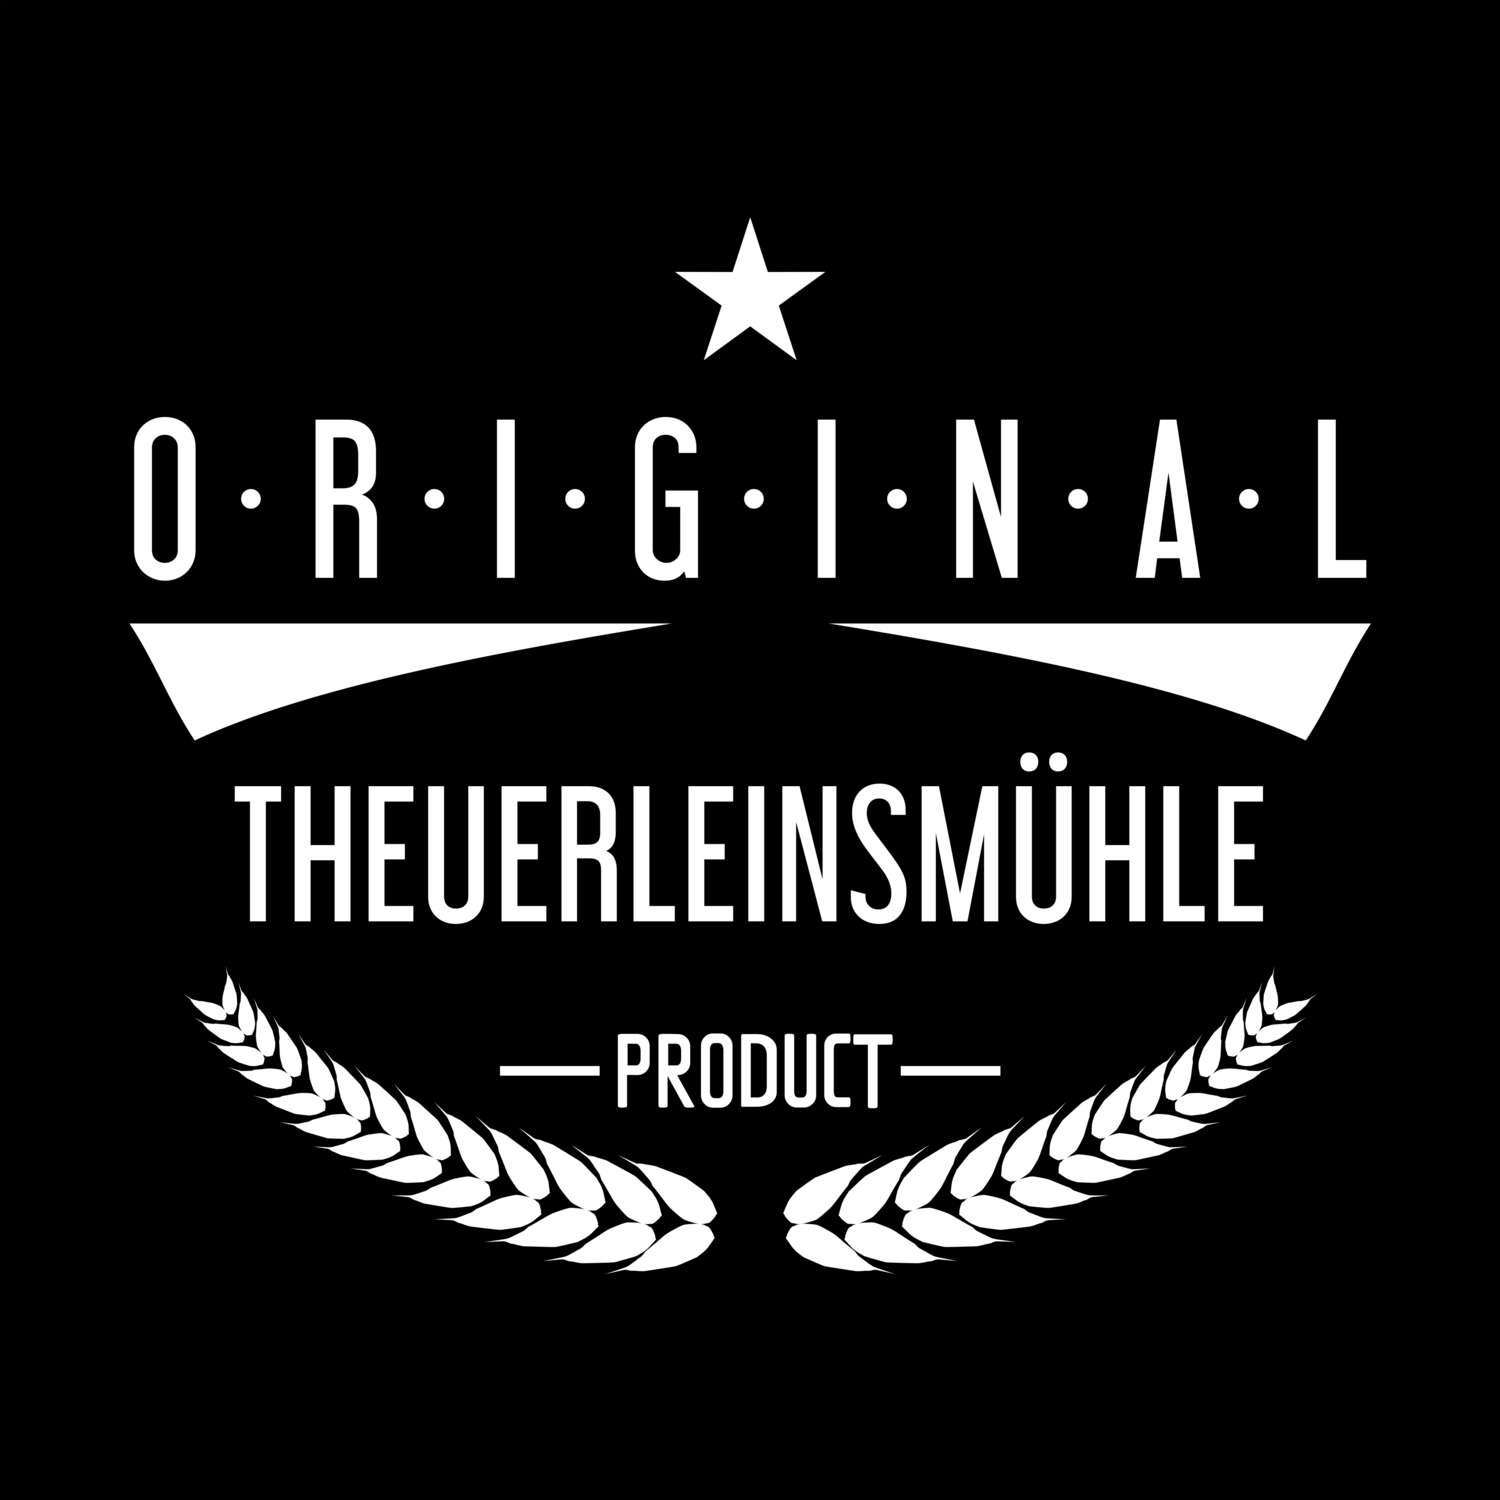 Theuerleinsmühle T-Shirt »Original Product«